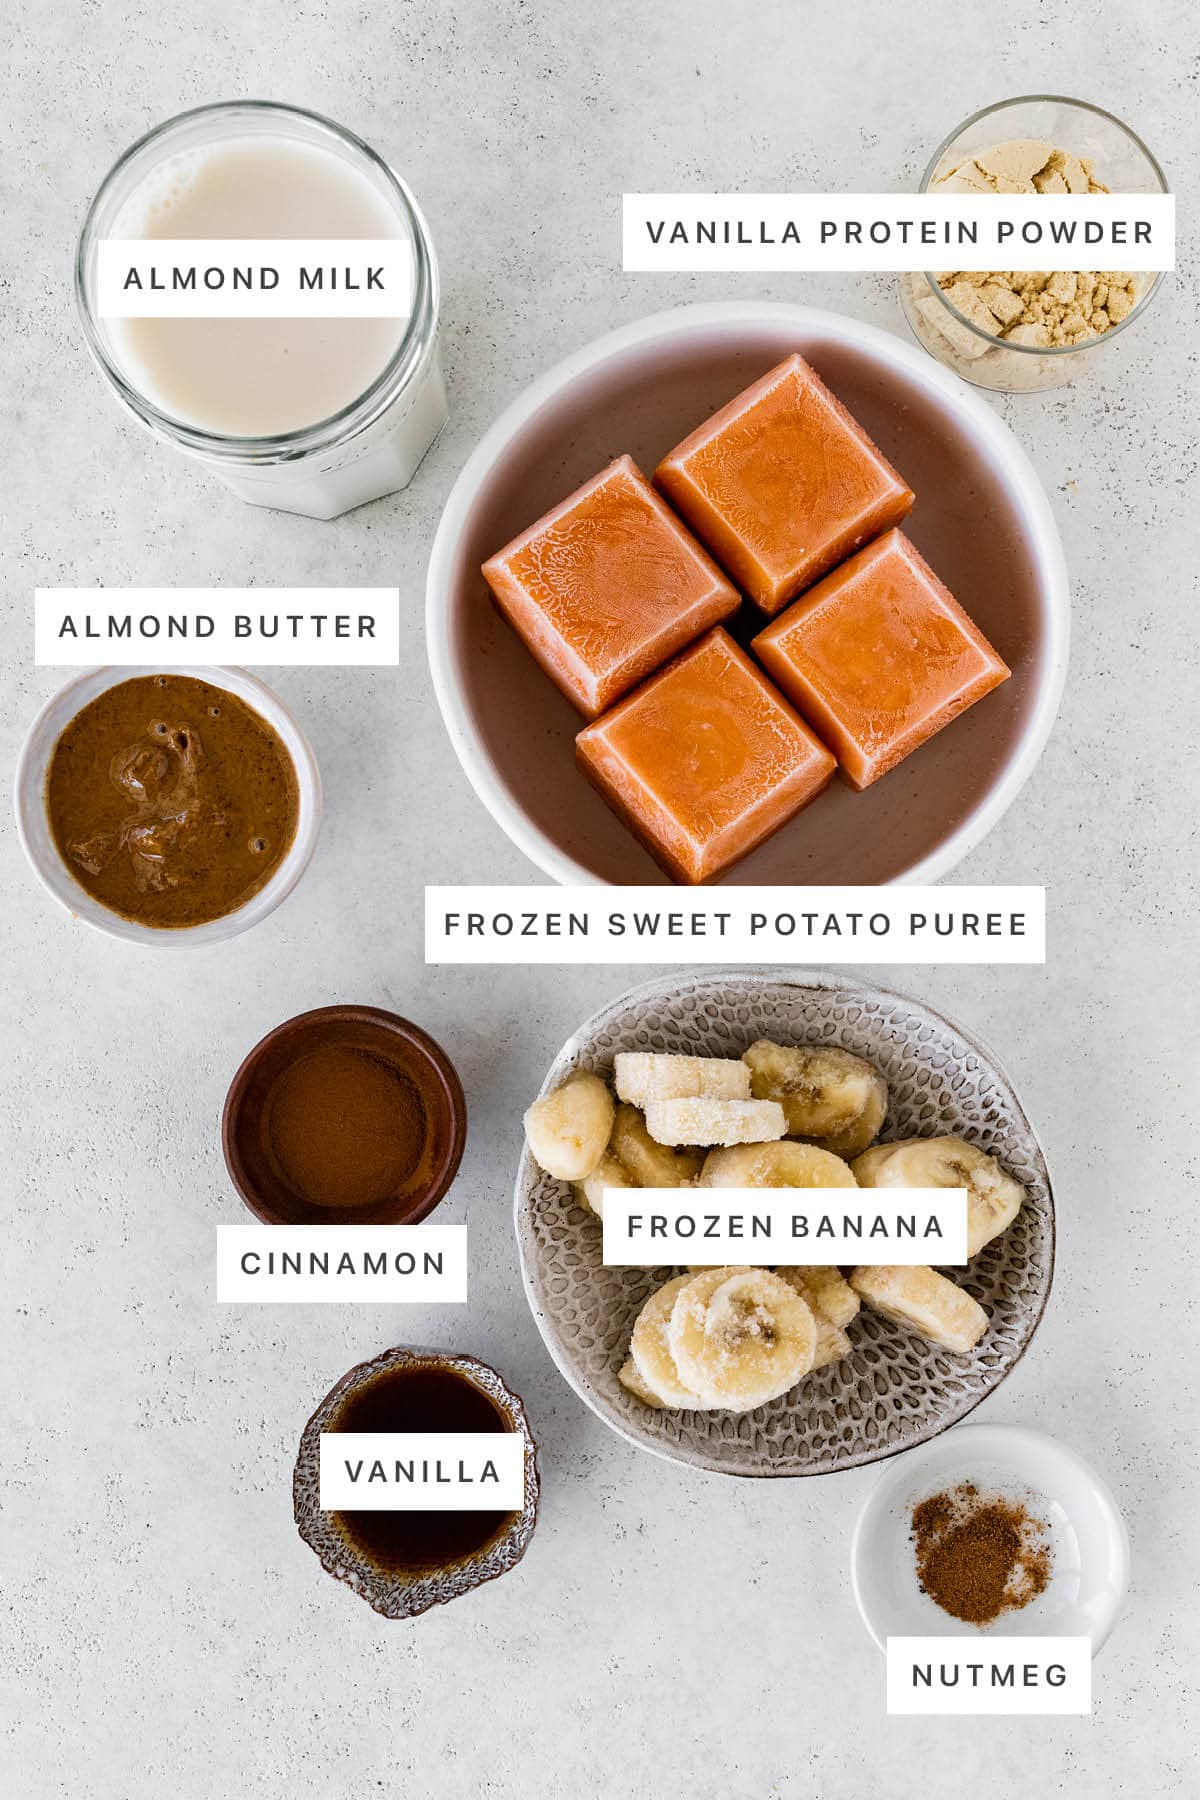 Ingredients measured out to make a Sweet Potato Smoothie: almond milk, vanilla protein powder, almond butter, frozen sweet potato puree, cinnamon, frozen banana, vanilla and nutmeg.